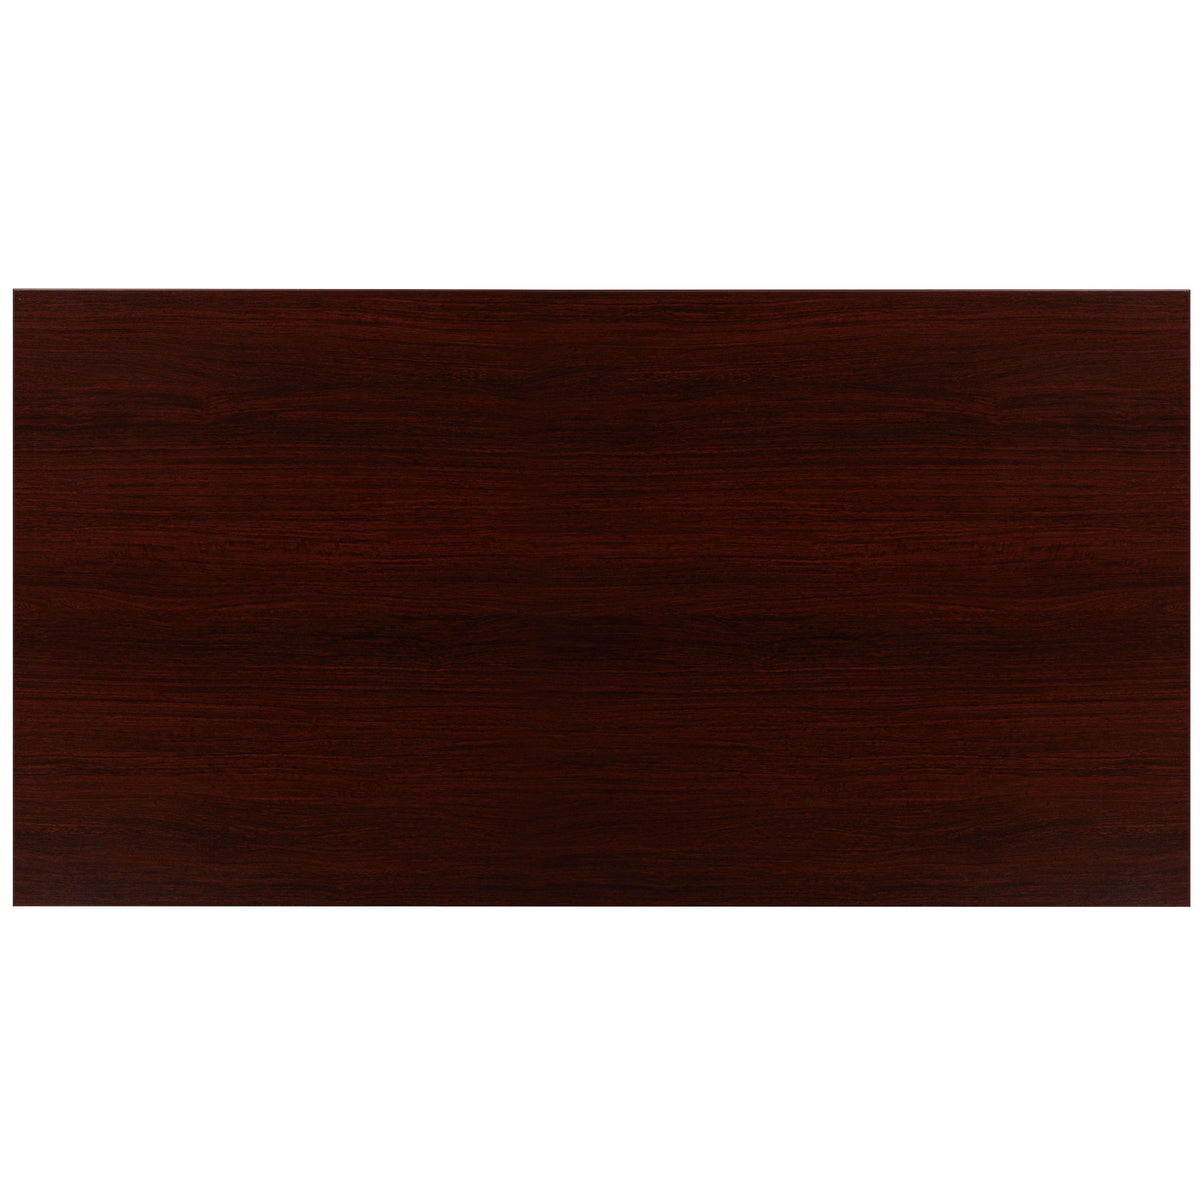 Mahogany Top/Black Frame |#| Industrial Modern Desk-47inchL Commercial Grade Home Office Desk-Mahogany/Black